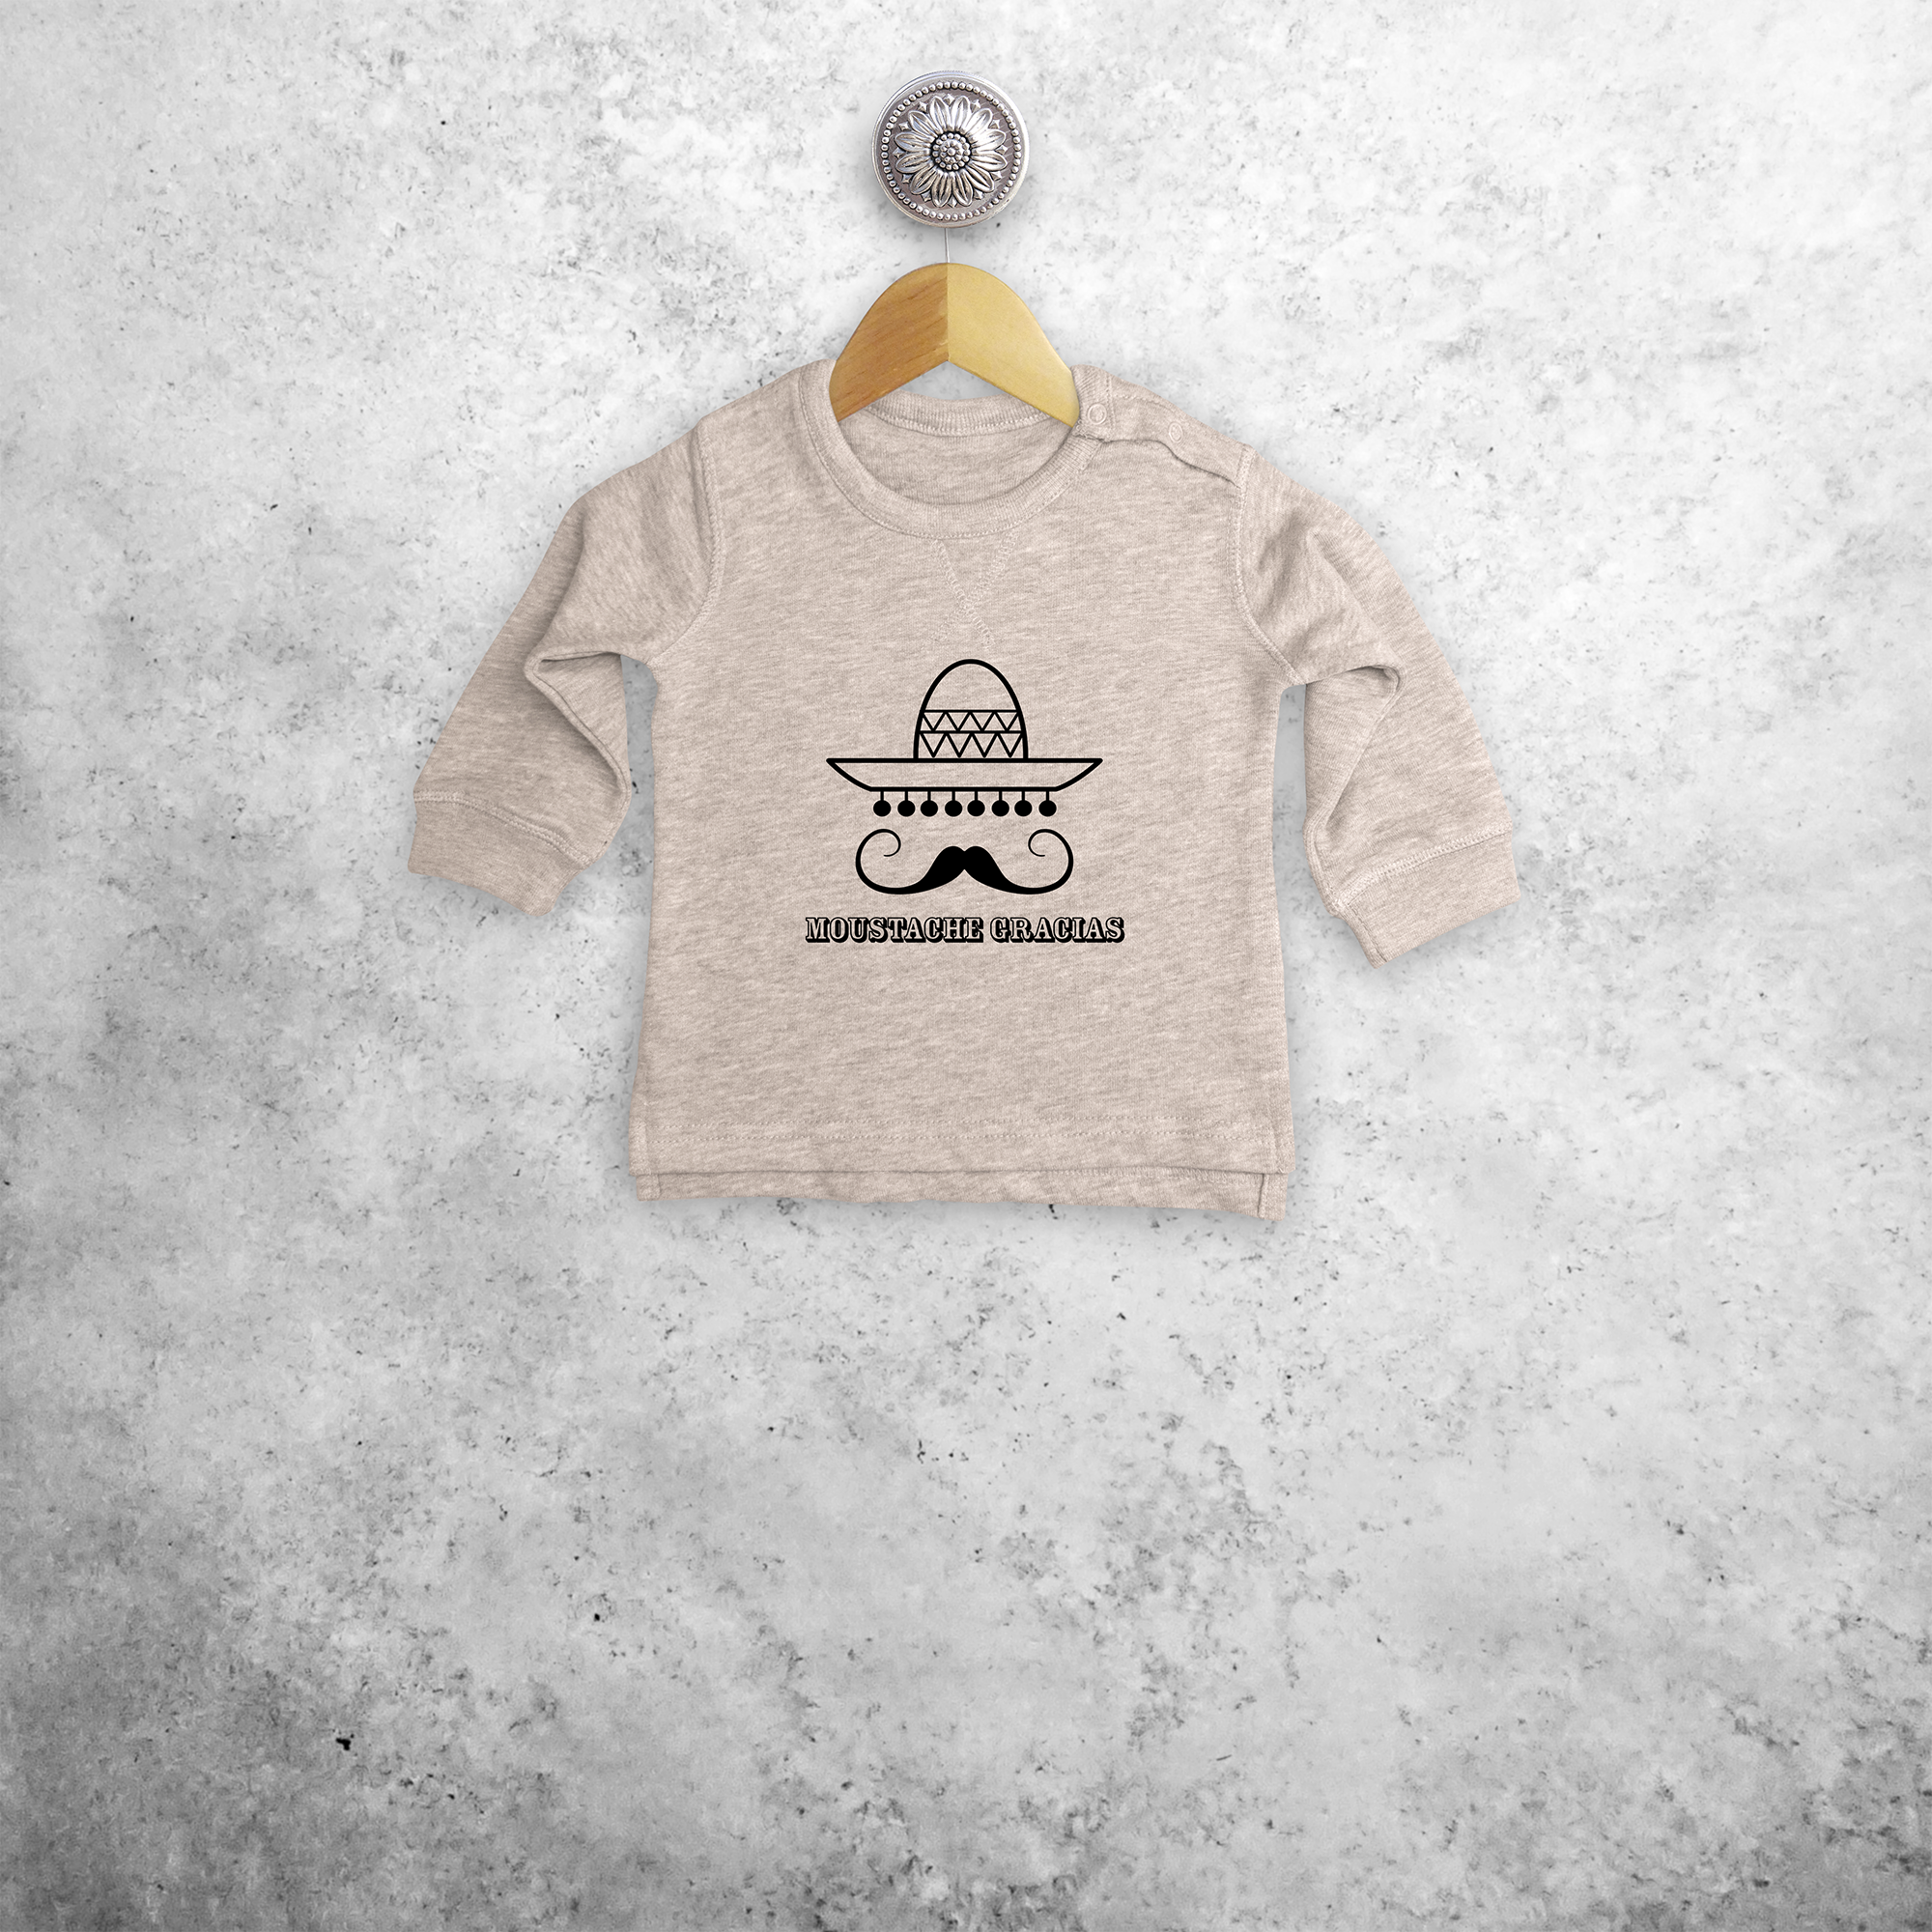 'Moustache gracias' baby trui